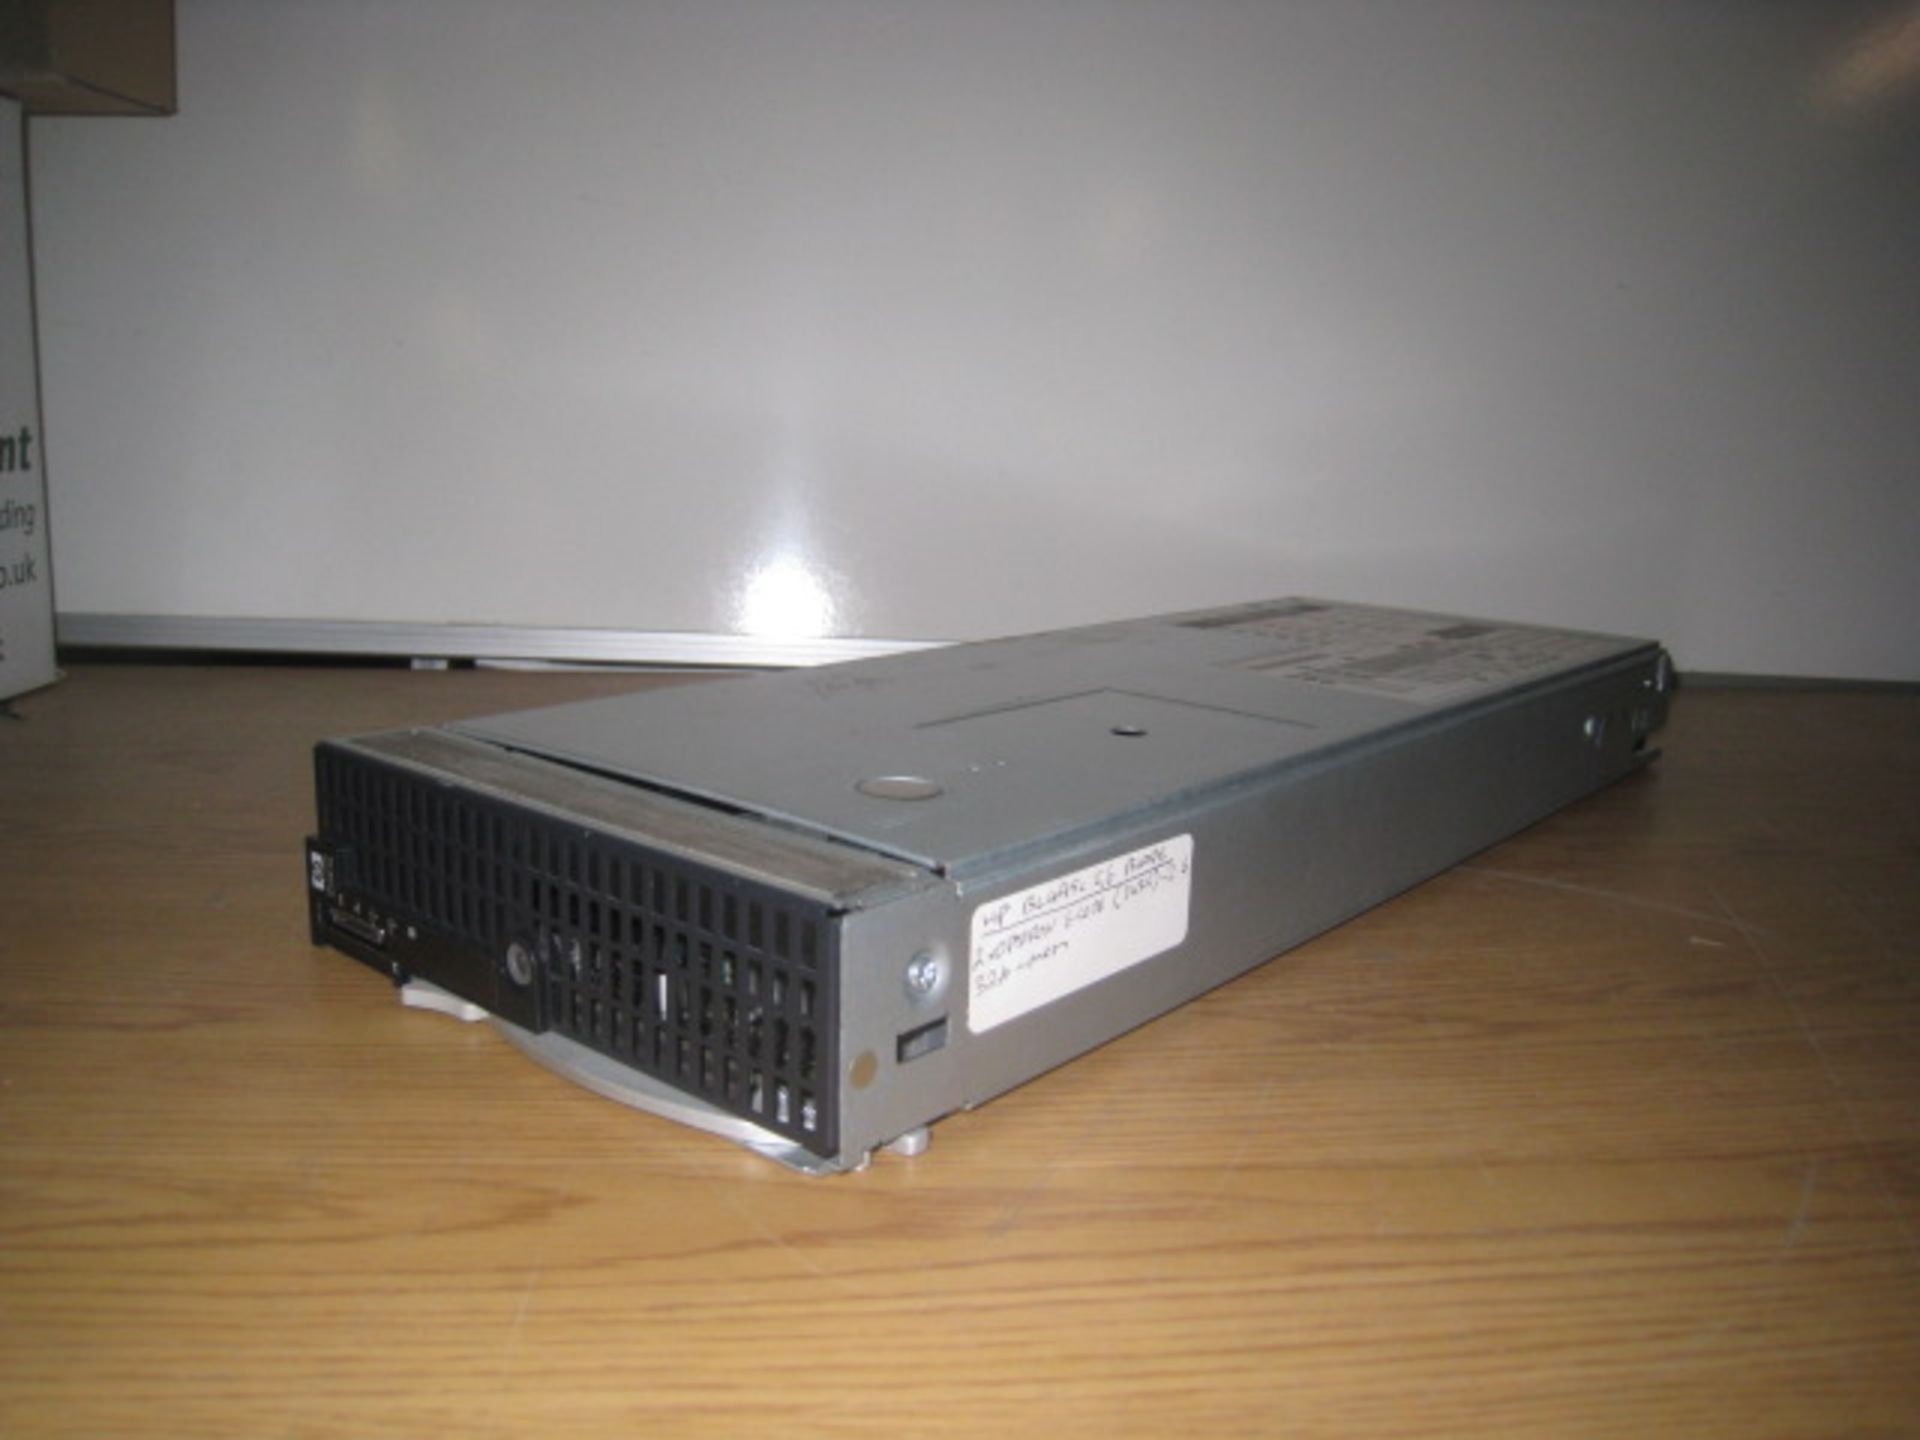 HP PROLIANT BL495c G6 SERVER BLADE. 2 X OPTERON SIX CORE 2.6GHZ (2435) PROCESSORS & 32GB RAM.